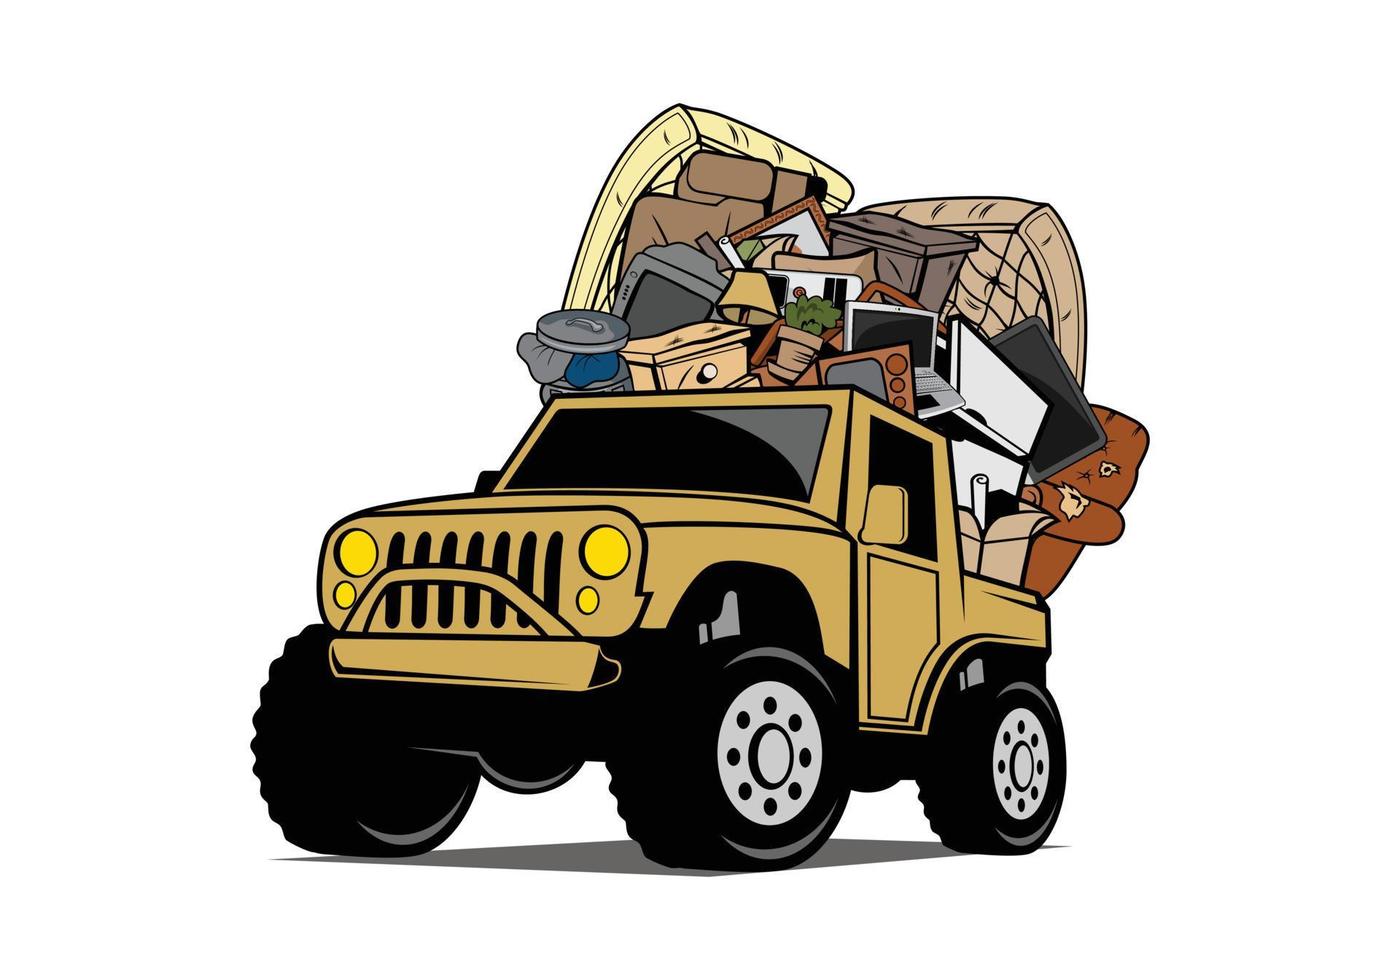 Offroad vehicle loaded full of household junk design illustration vector